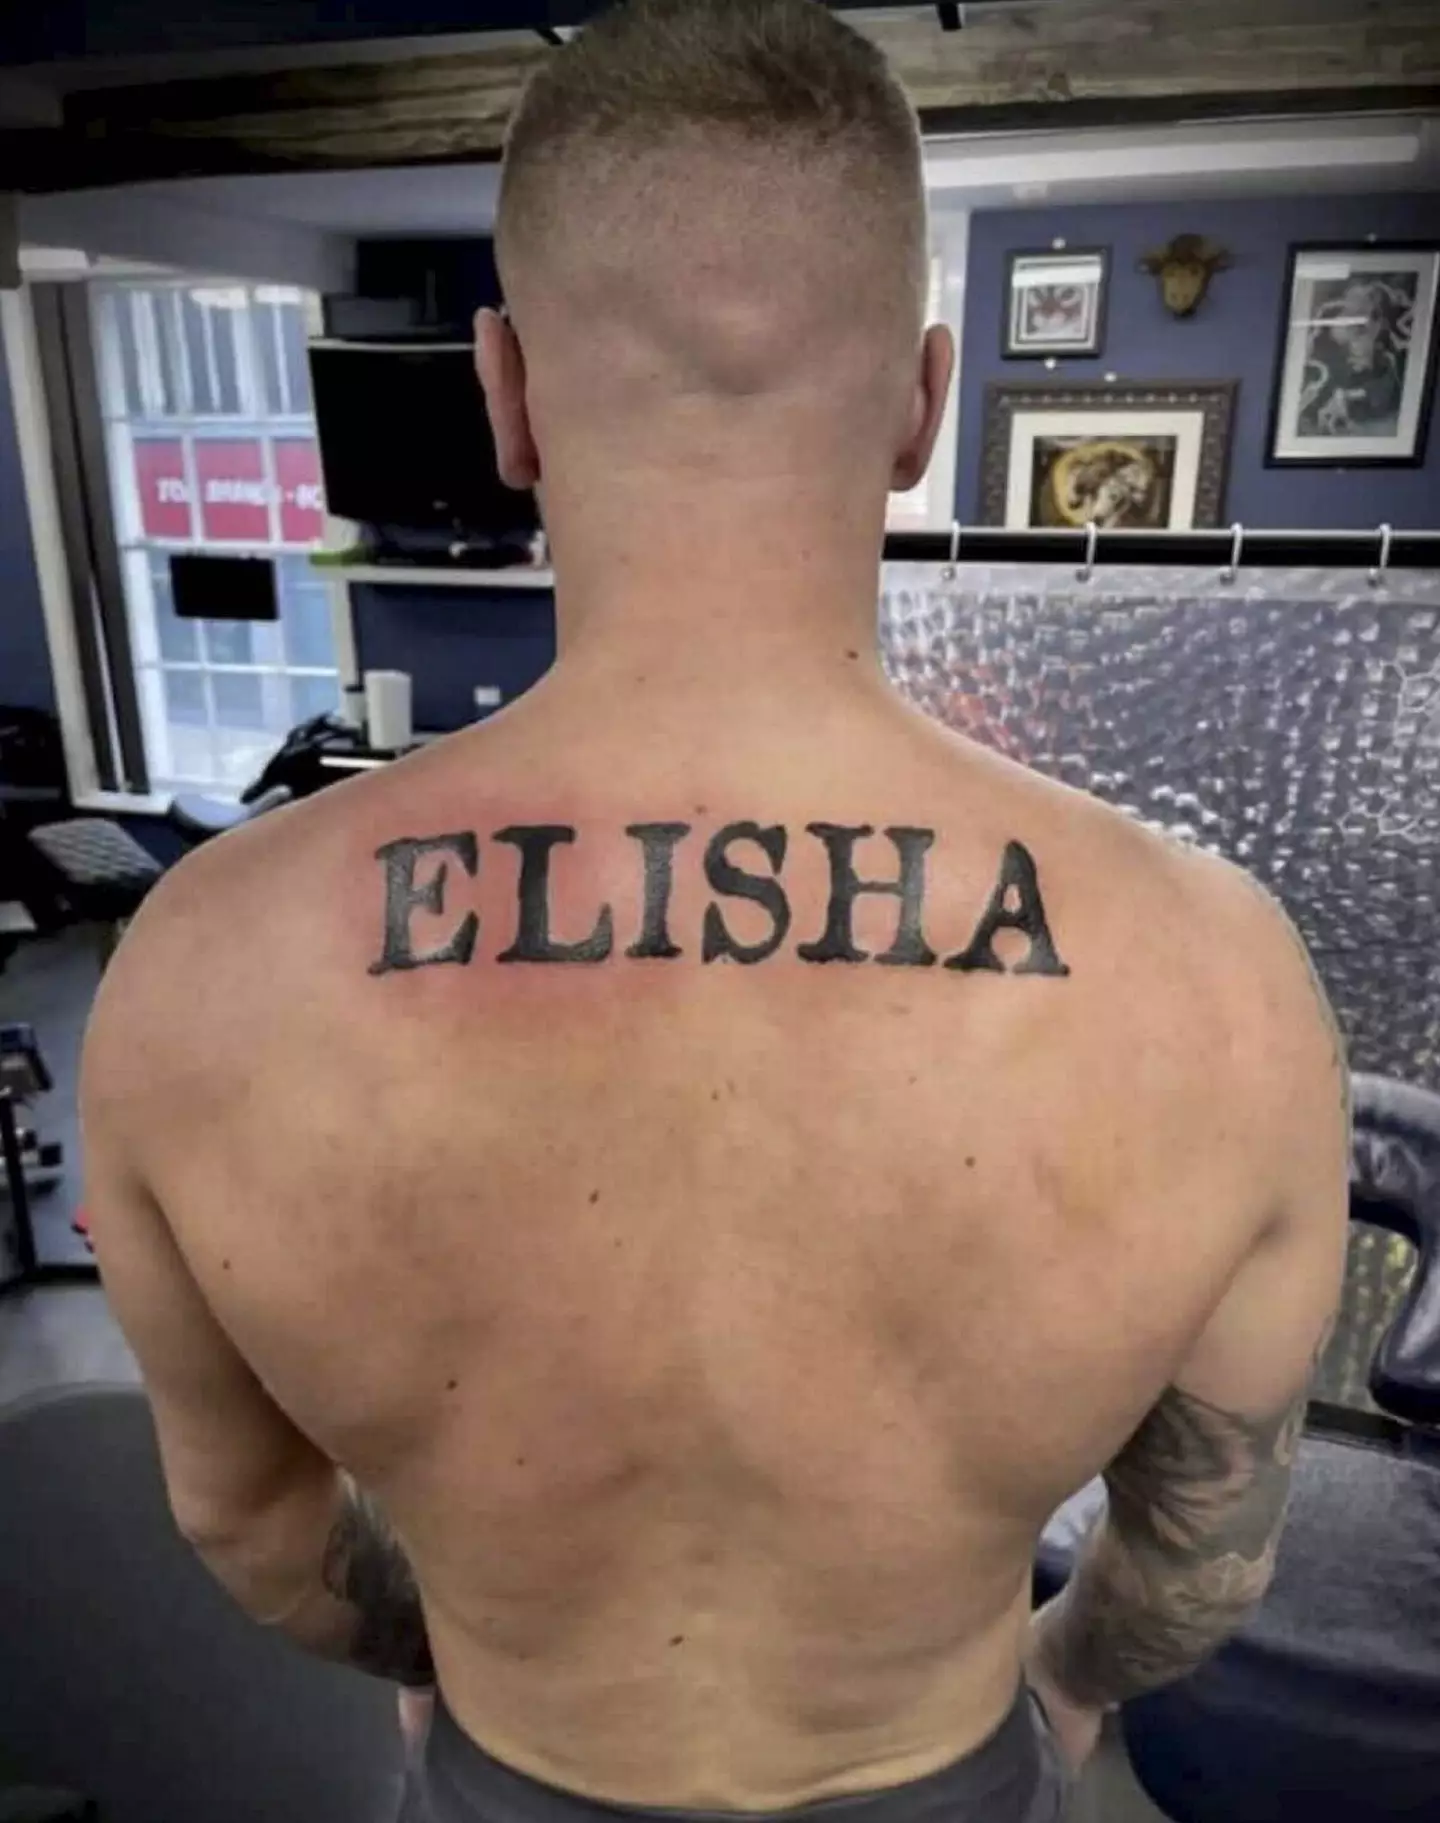 Elisha, a love story in tattoo form.